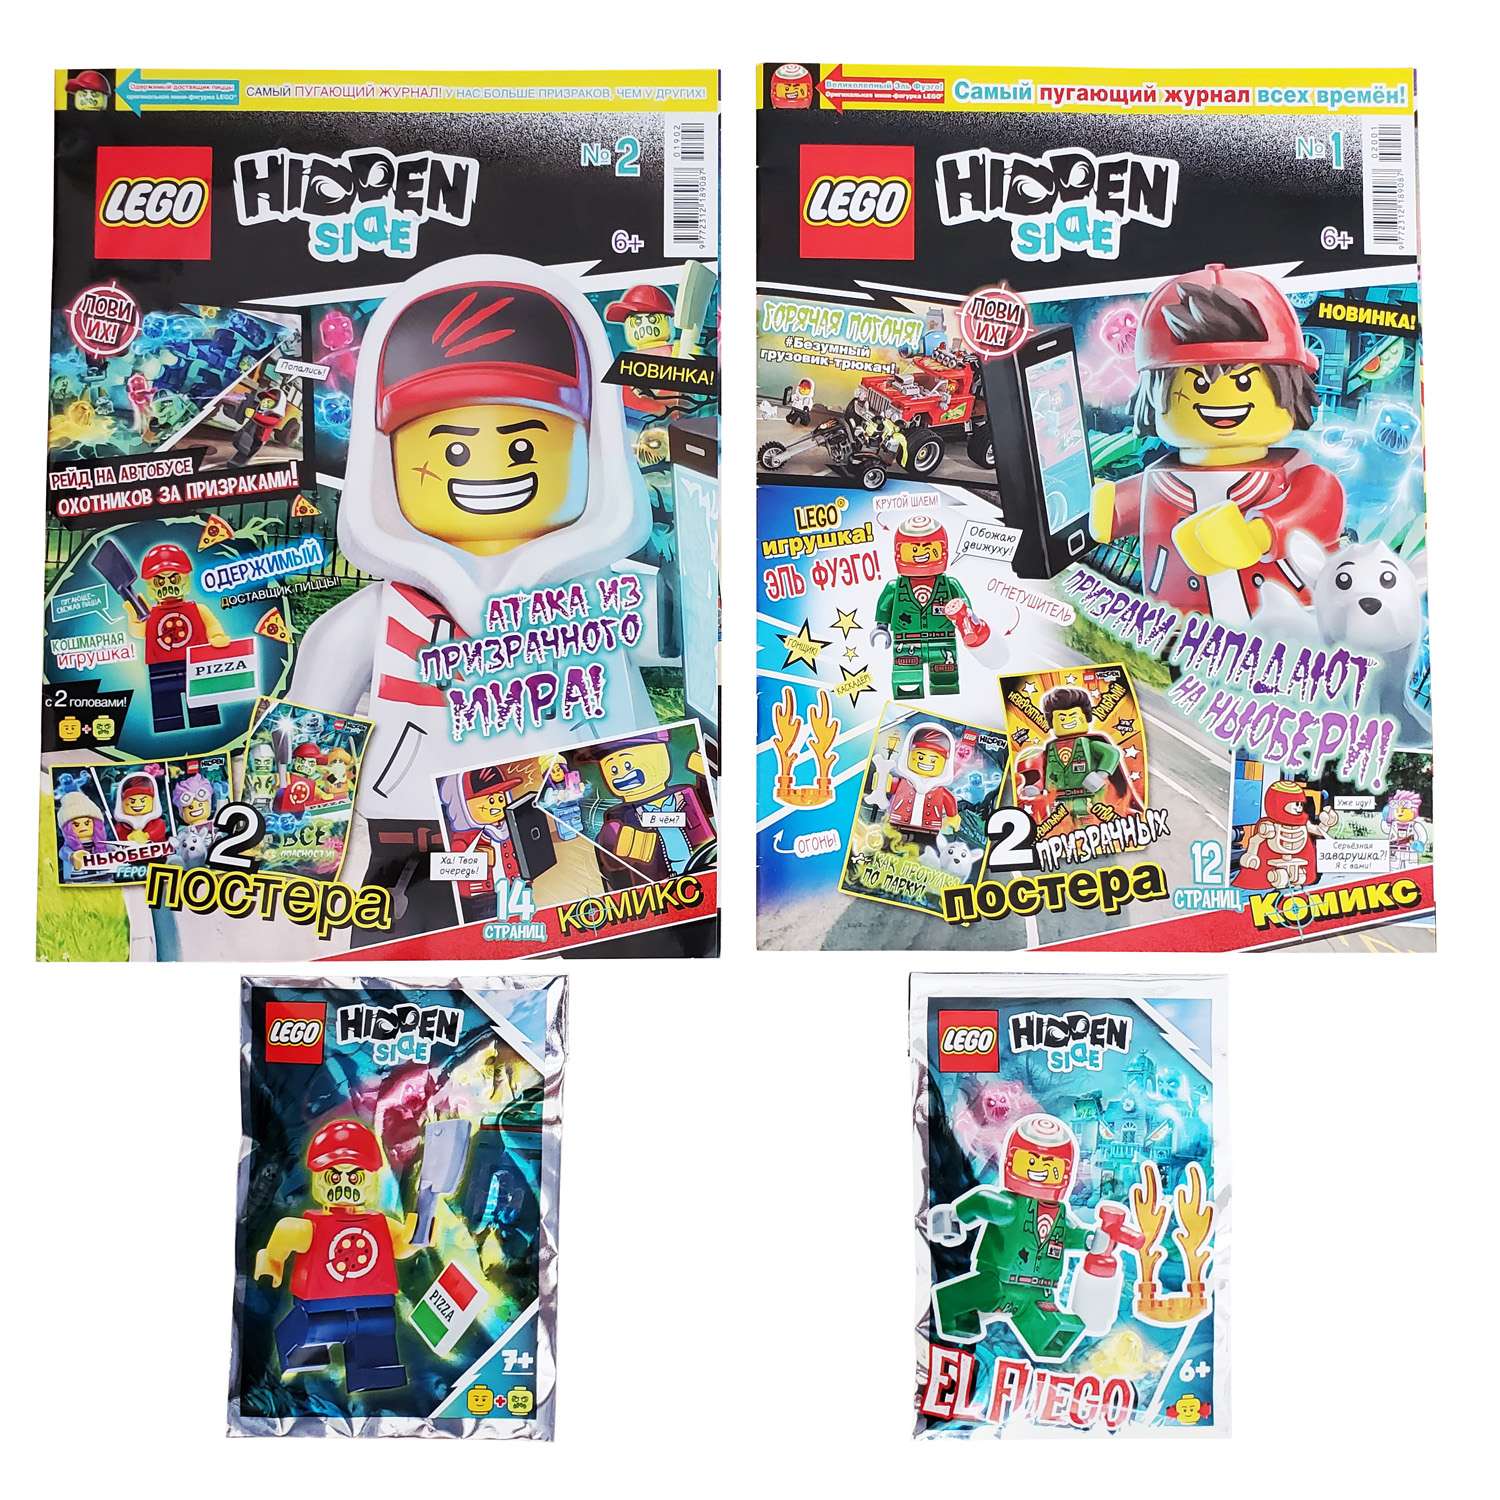 Журнал LEGO Hidden Side 2 по цене 1 - фото 2